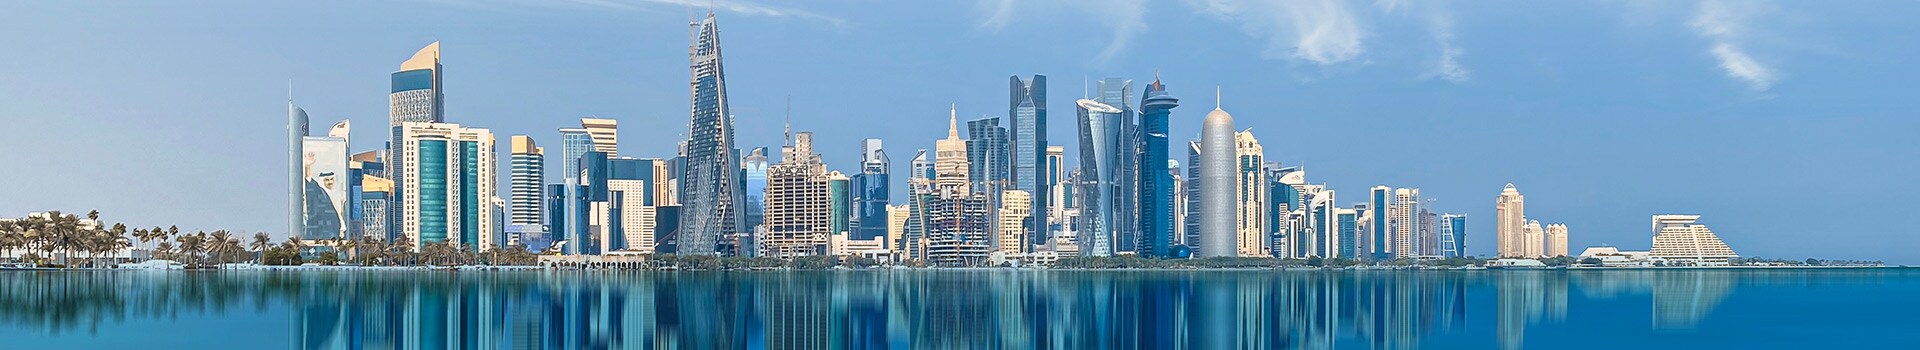 London - Doha